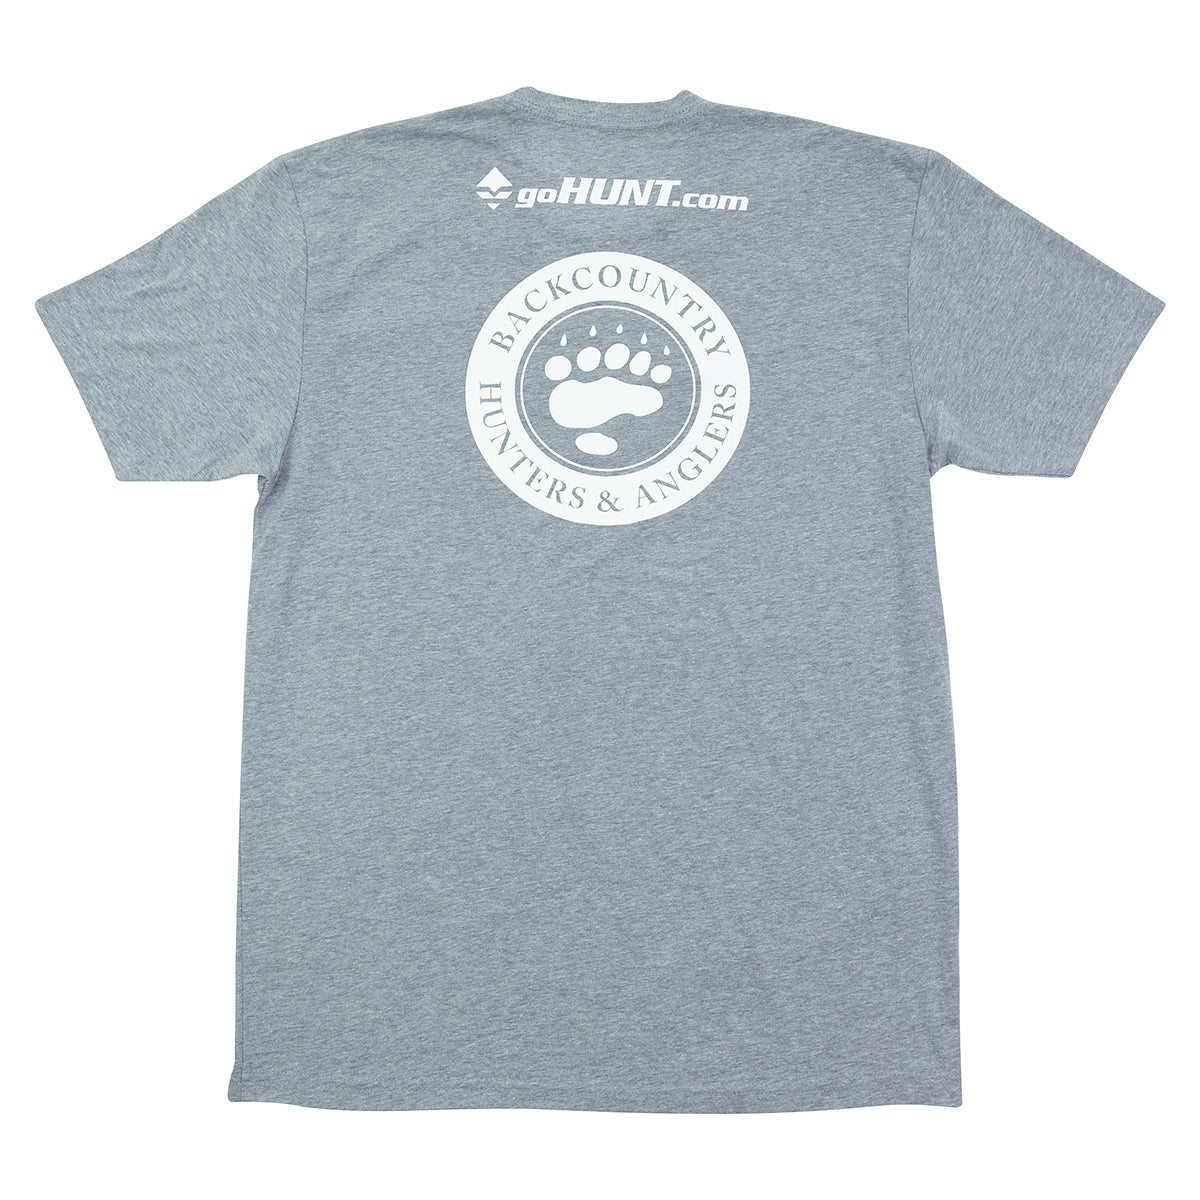 Public Land Owner T-Shirt (goHUNT Edition) by goHUNT | Apparel - goHUNT Shop